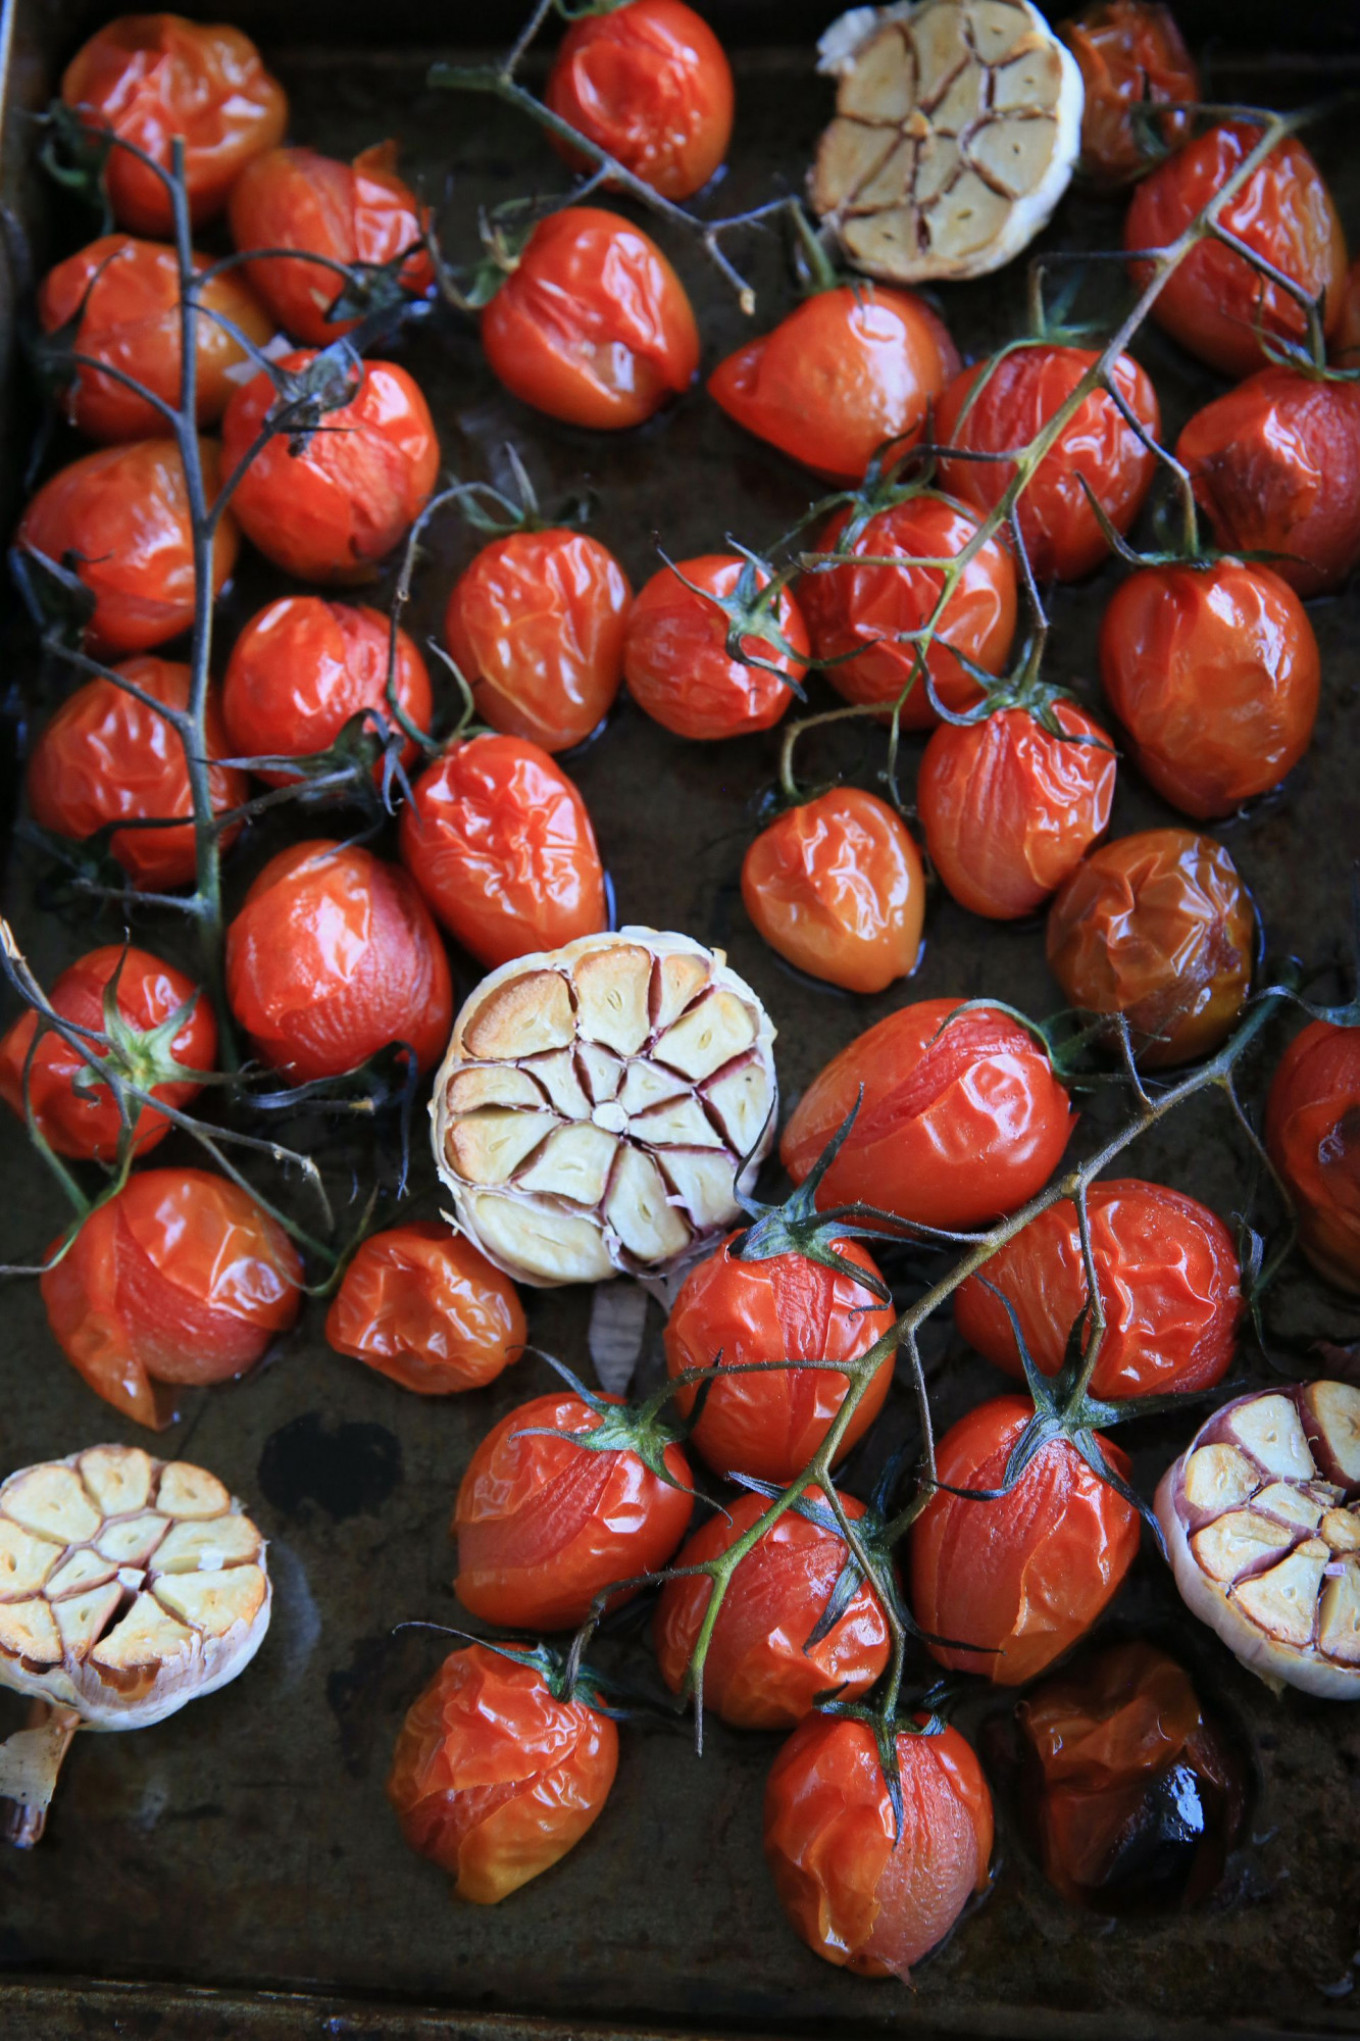  Roasted tomatoes and garlic bring depth of flavor Jennifer Eremeeva / MT 